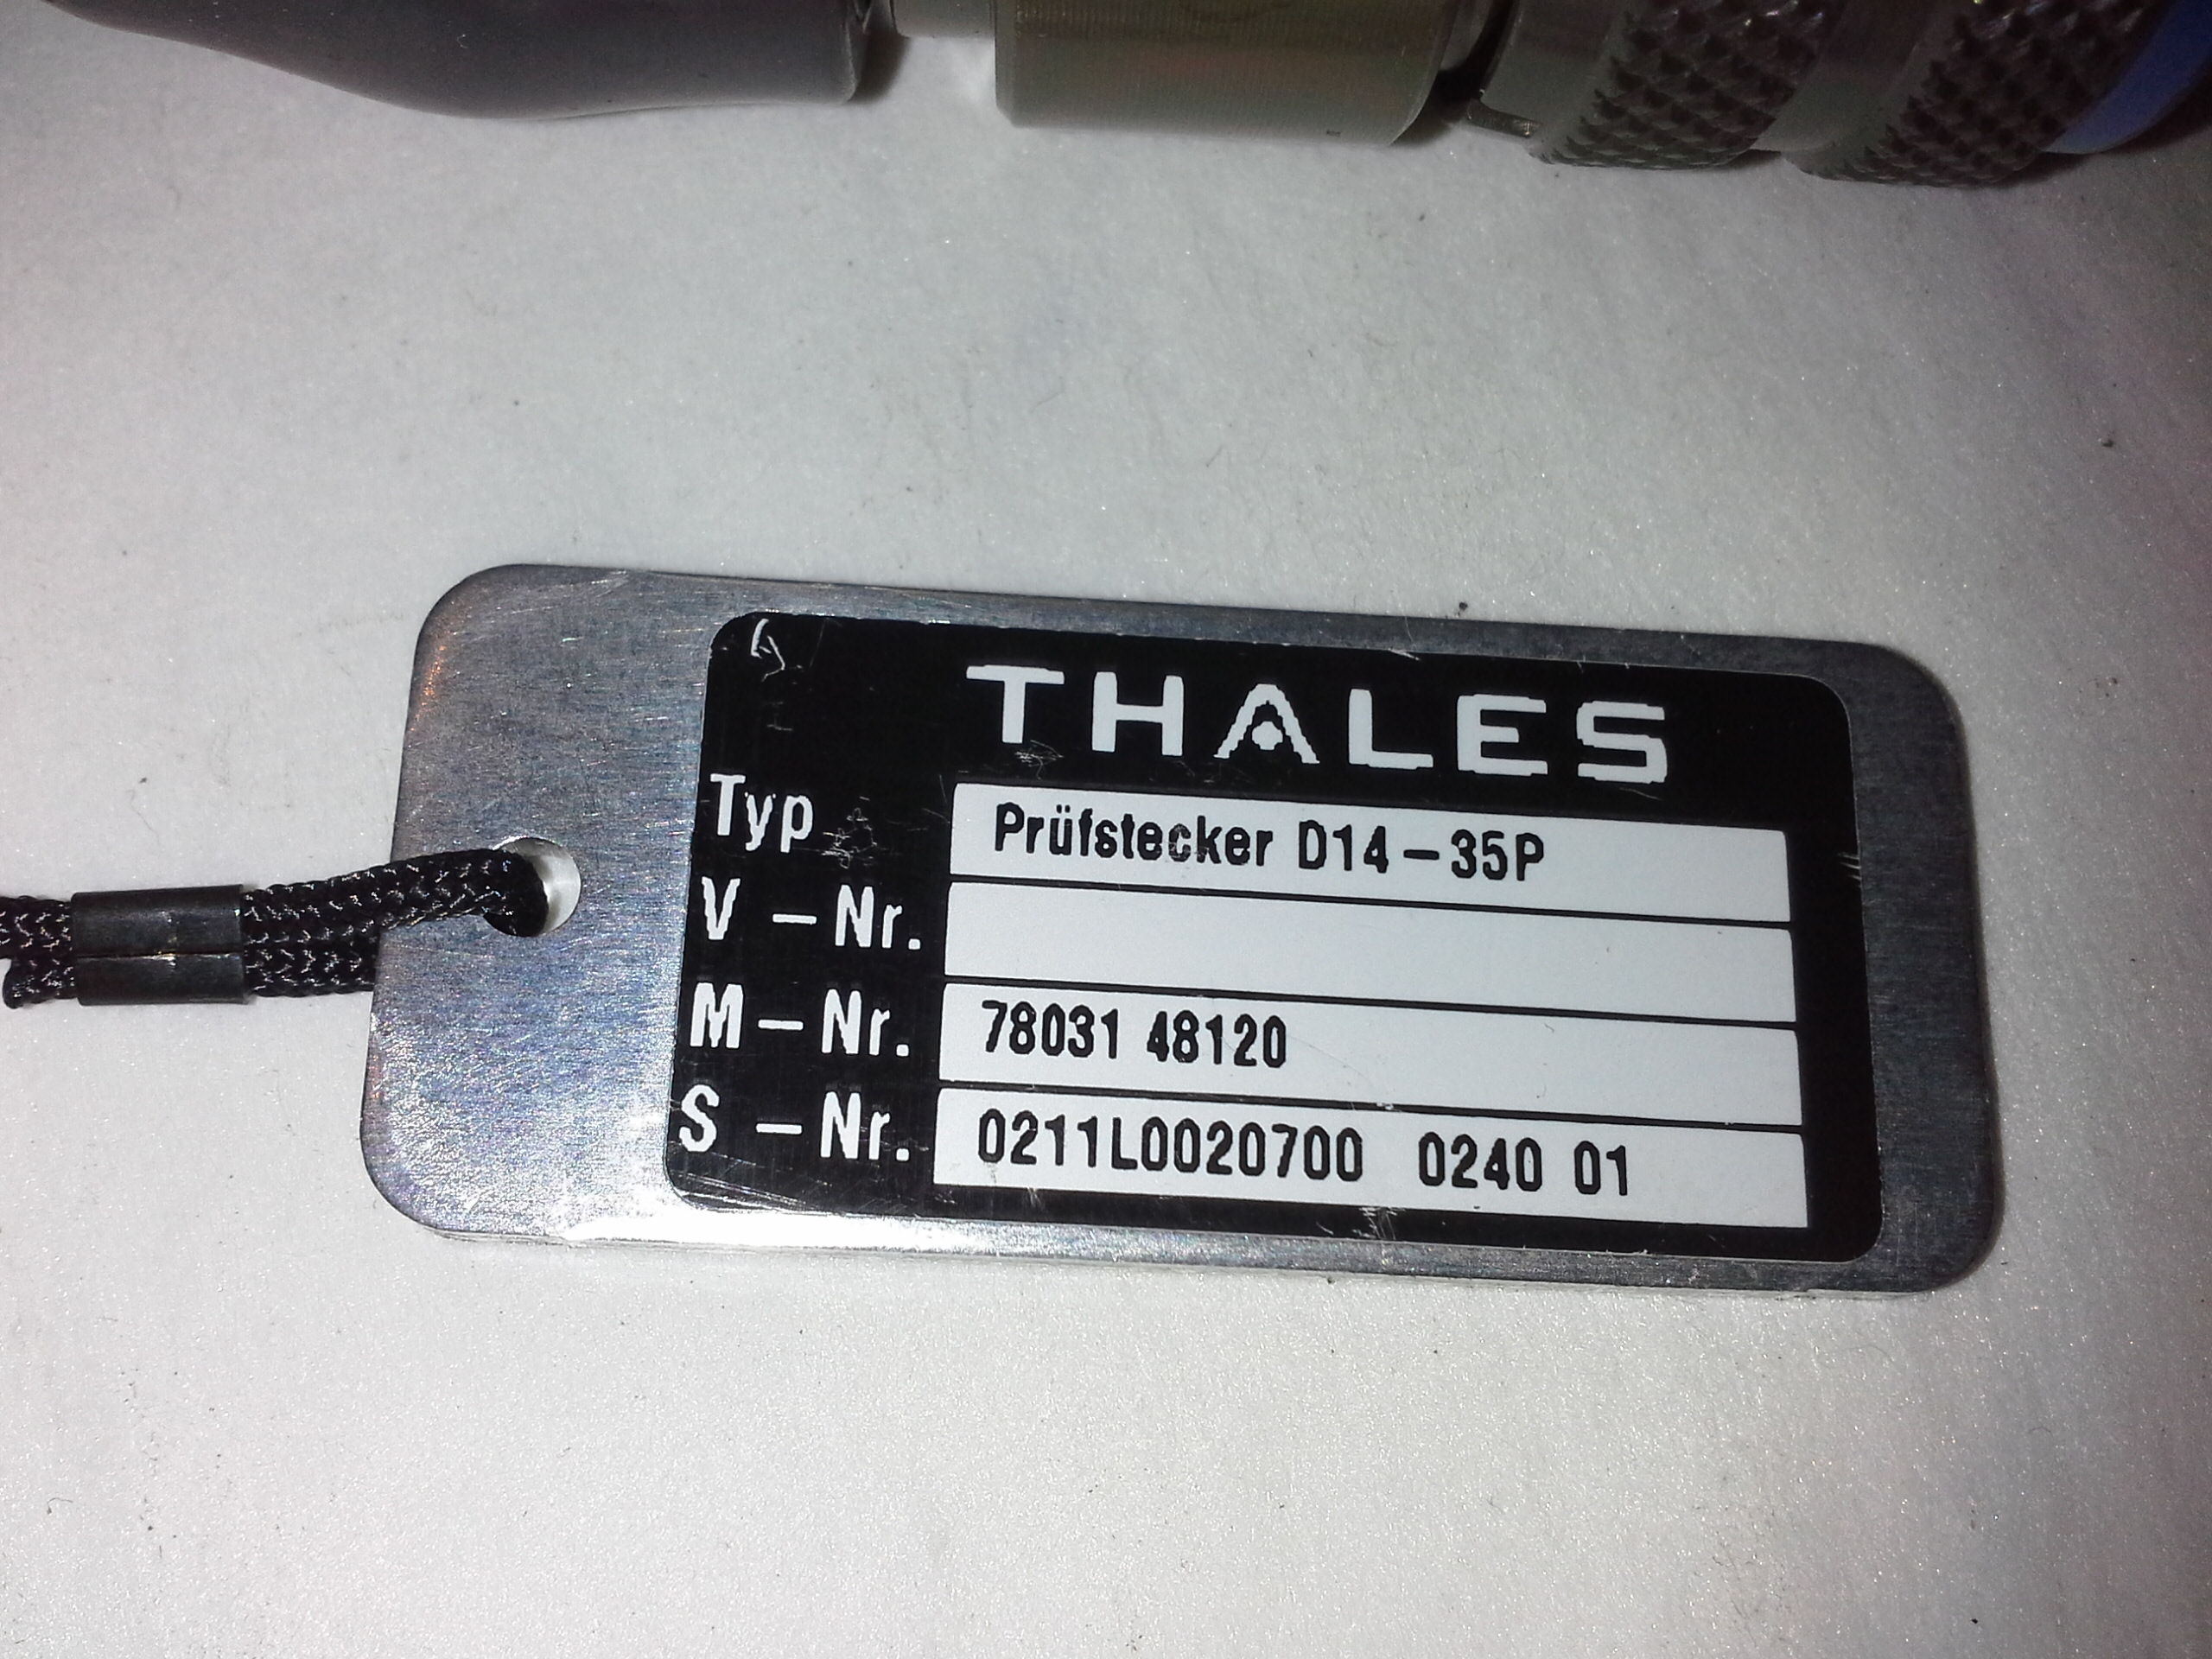 Thales Prüfstecker D14 - 35P